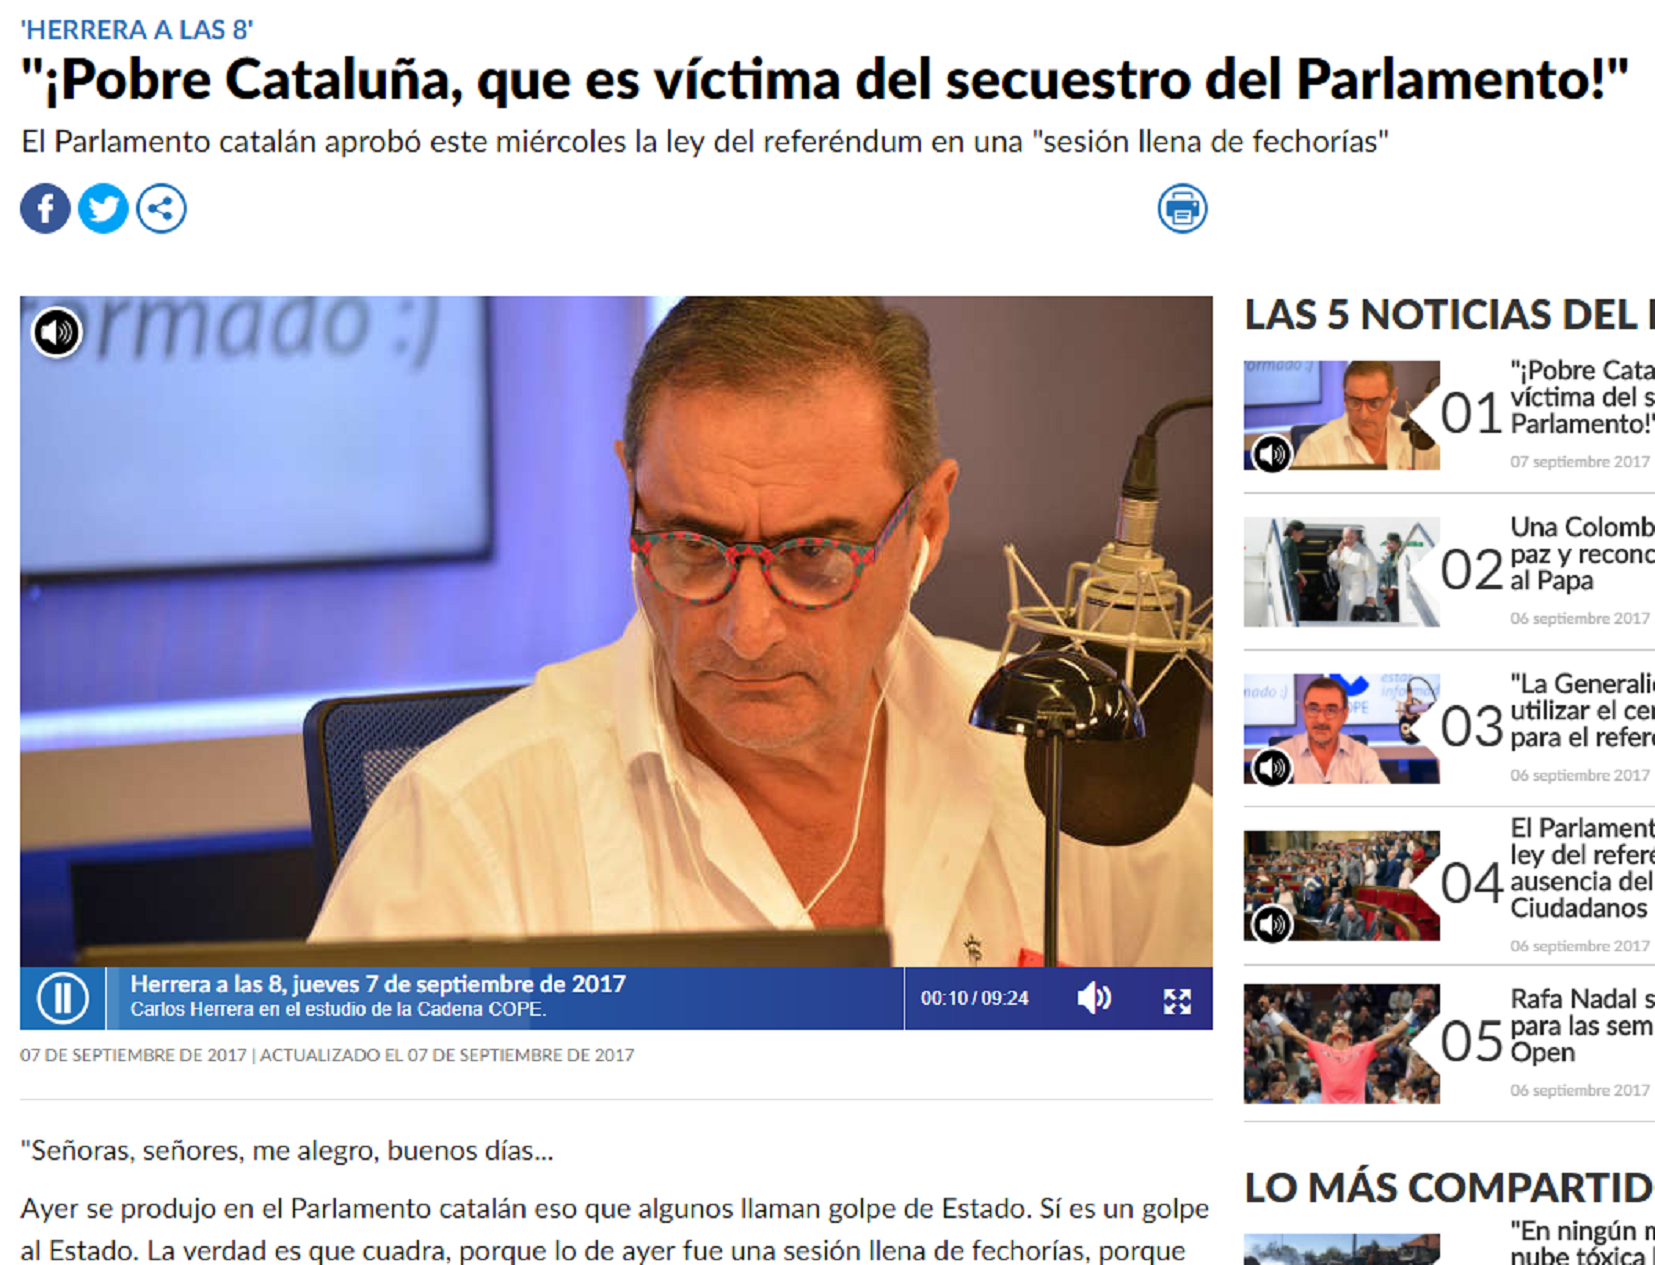 From "train crash" to "assault", Spanish radio attacks the Referendum Law